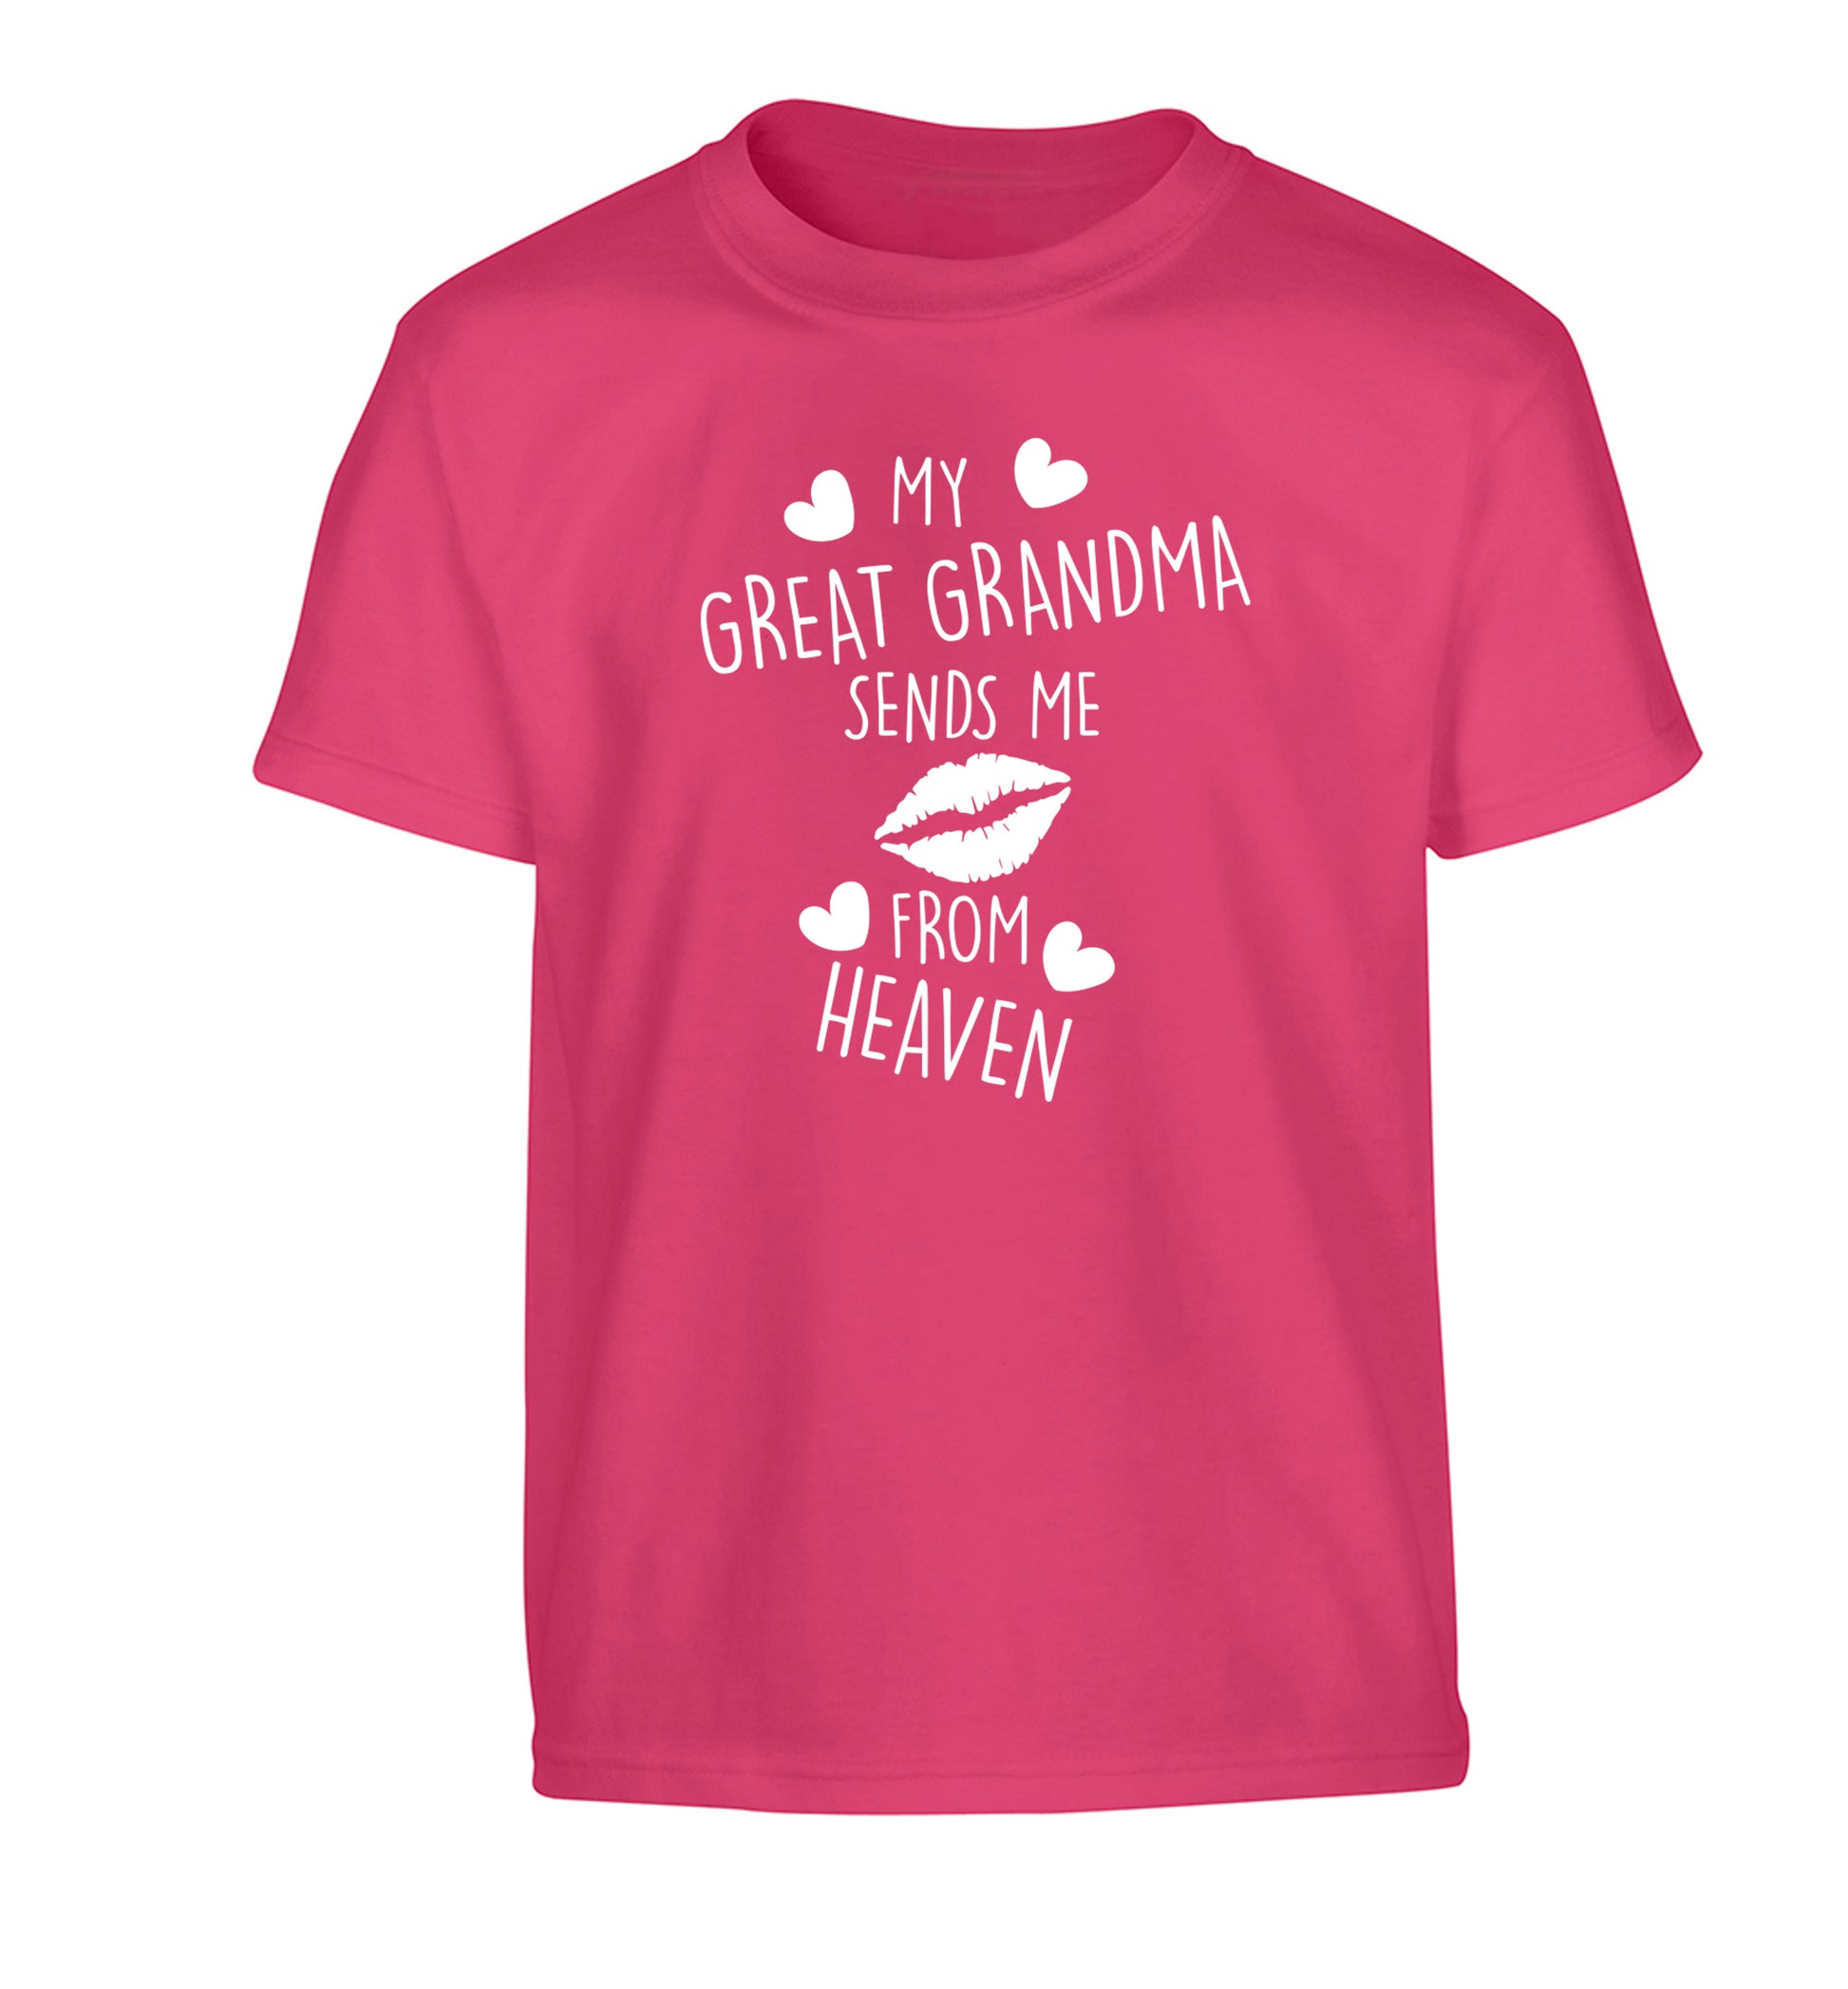 My great grandma sends me kisses from heaven Children's pink Tshirt 12-14 Years